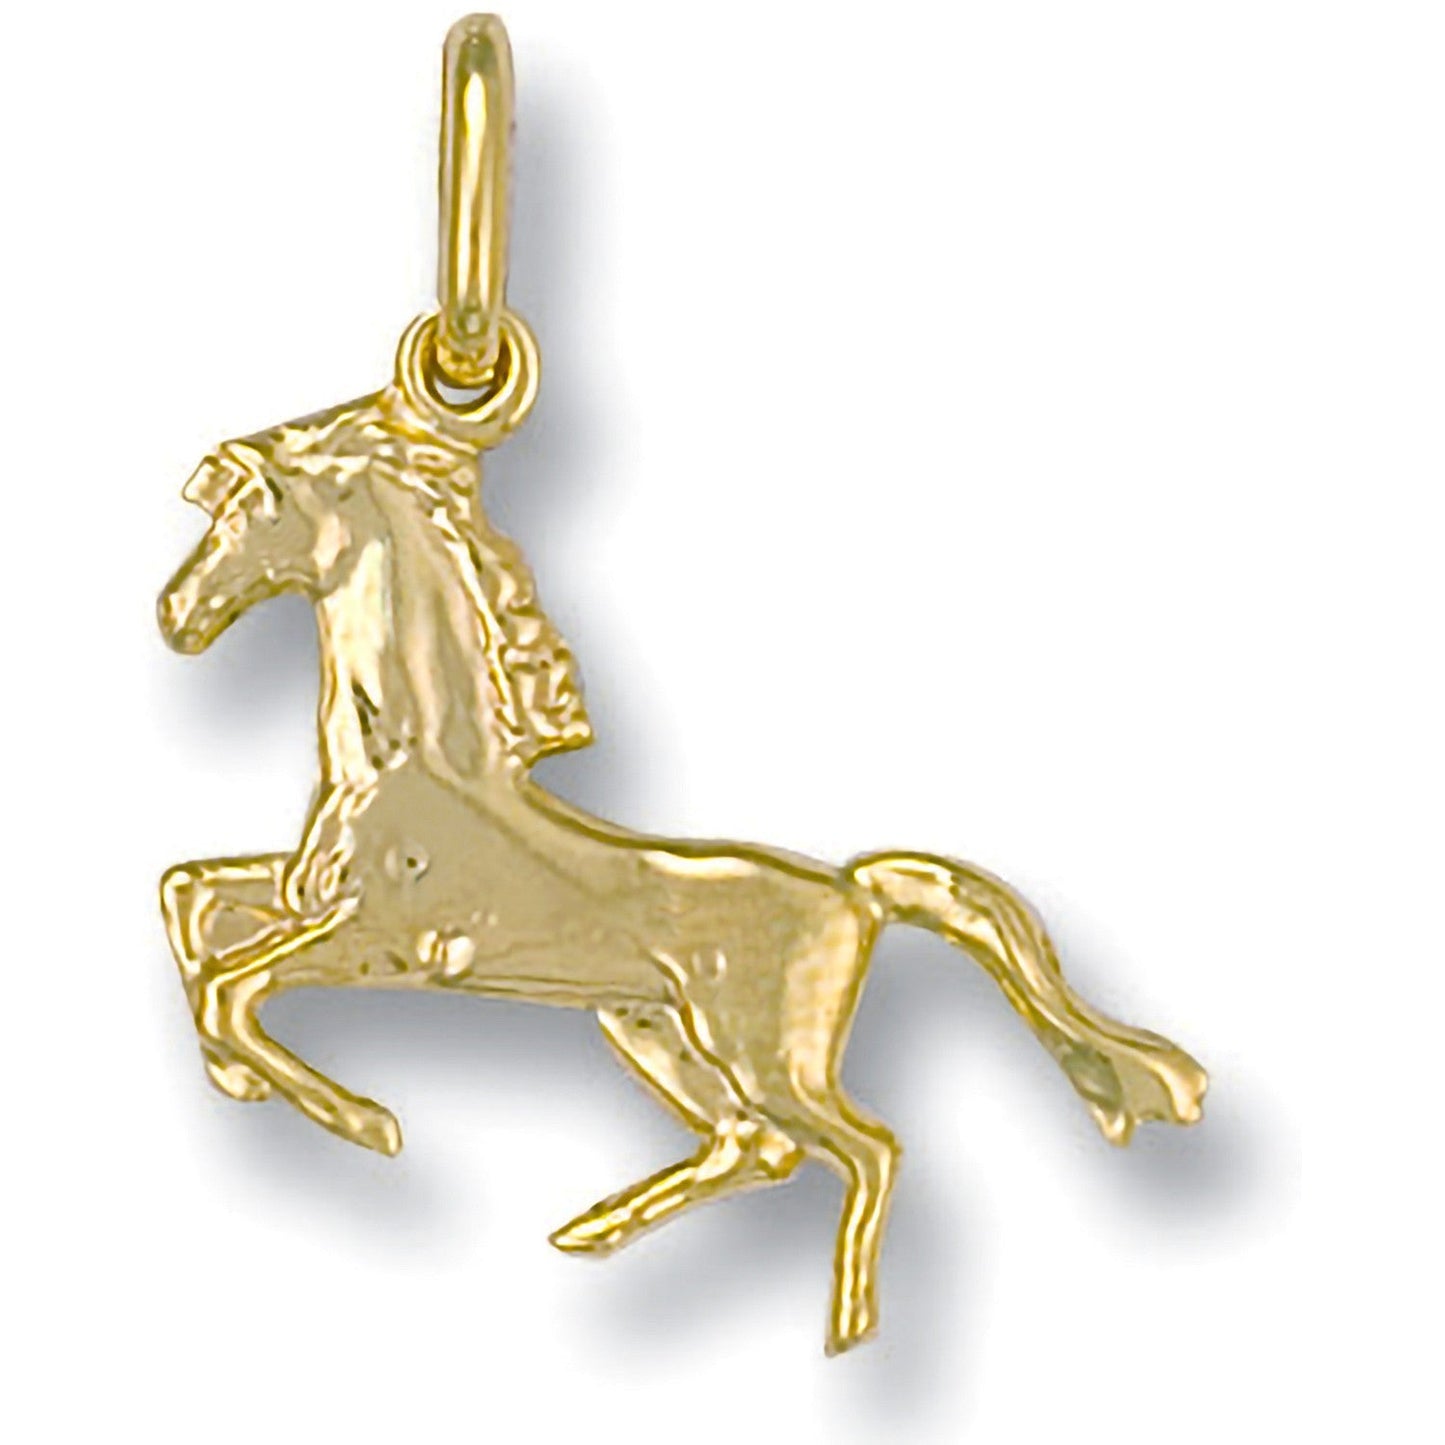 9ct Yellow Gold Horse Pendant - FJewellery